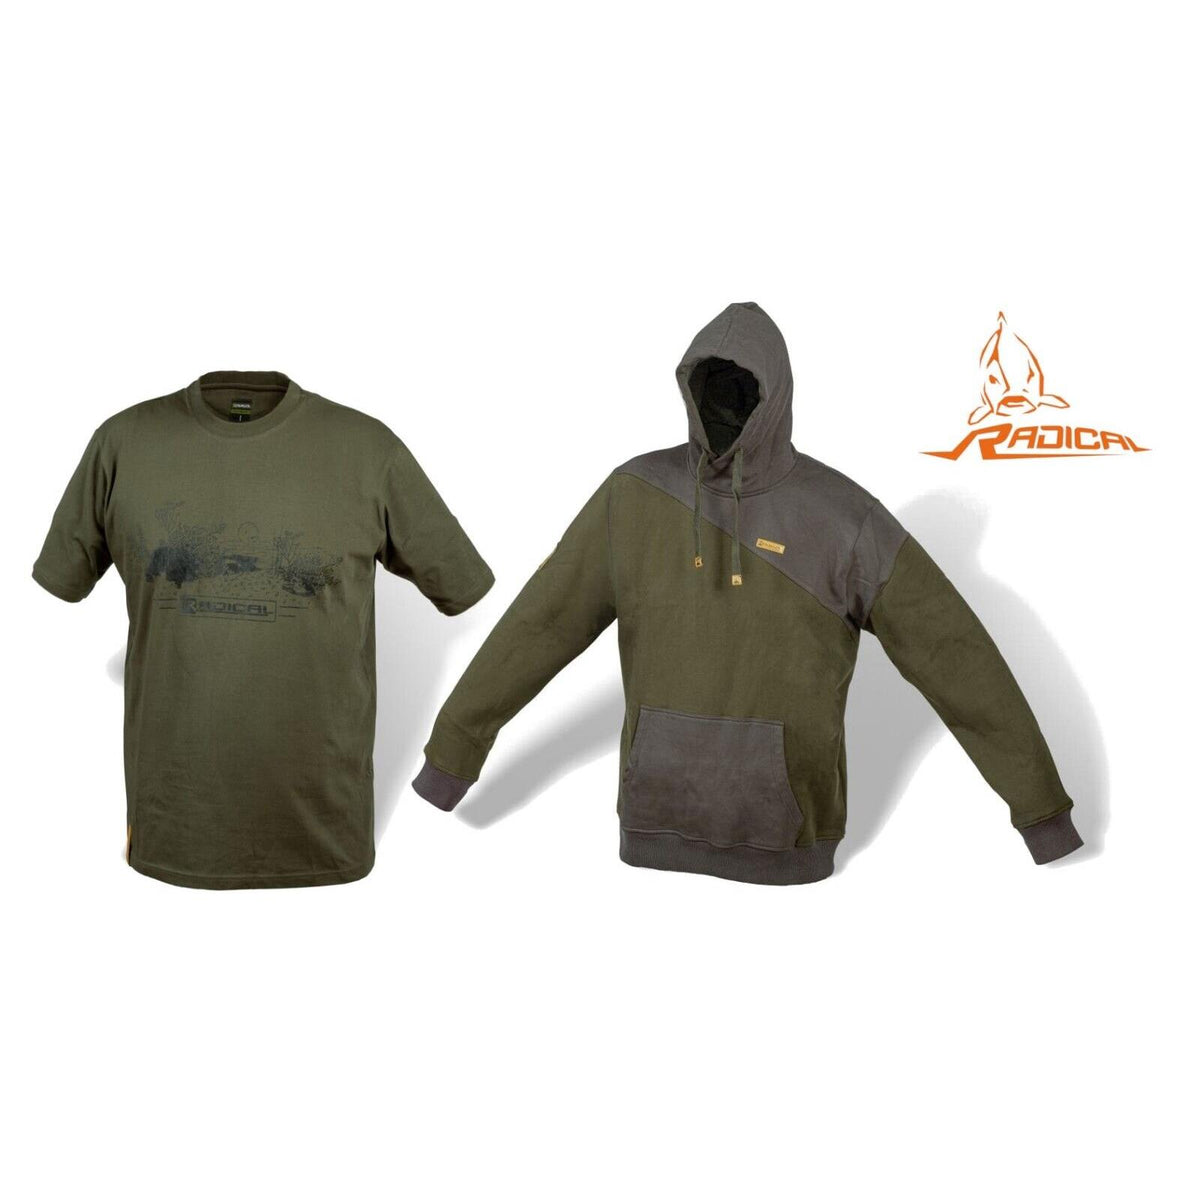 Radical Rough Hoody Hoodie Brown/Olive Green T Shirt Carp Fishing Clot